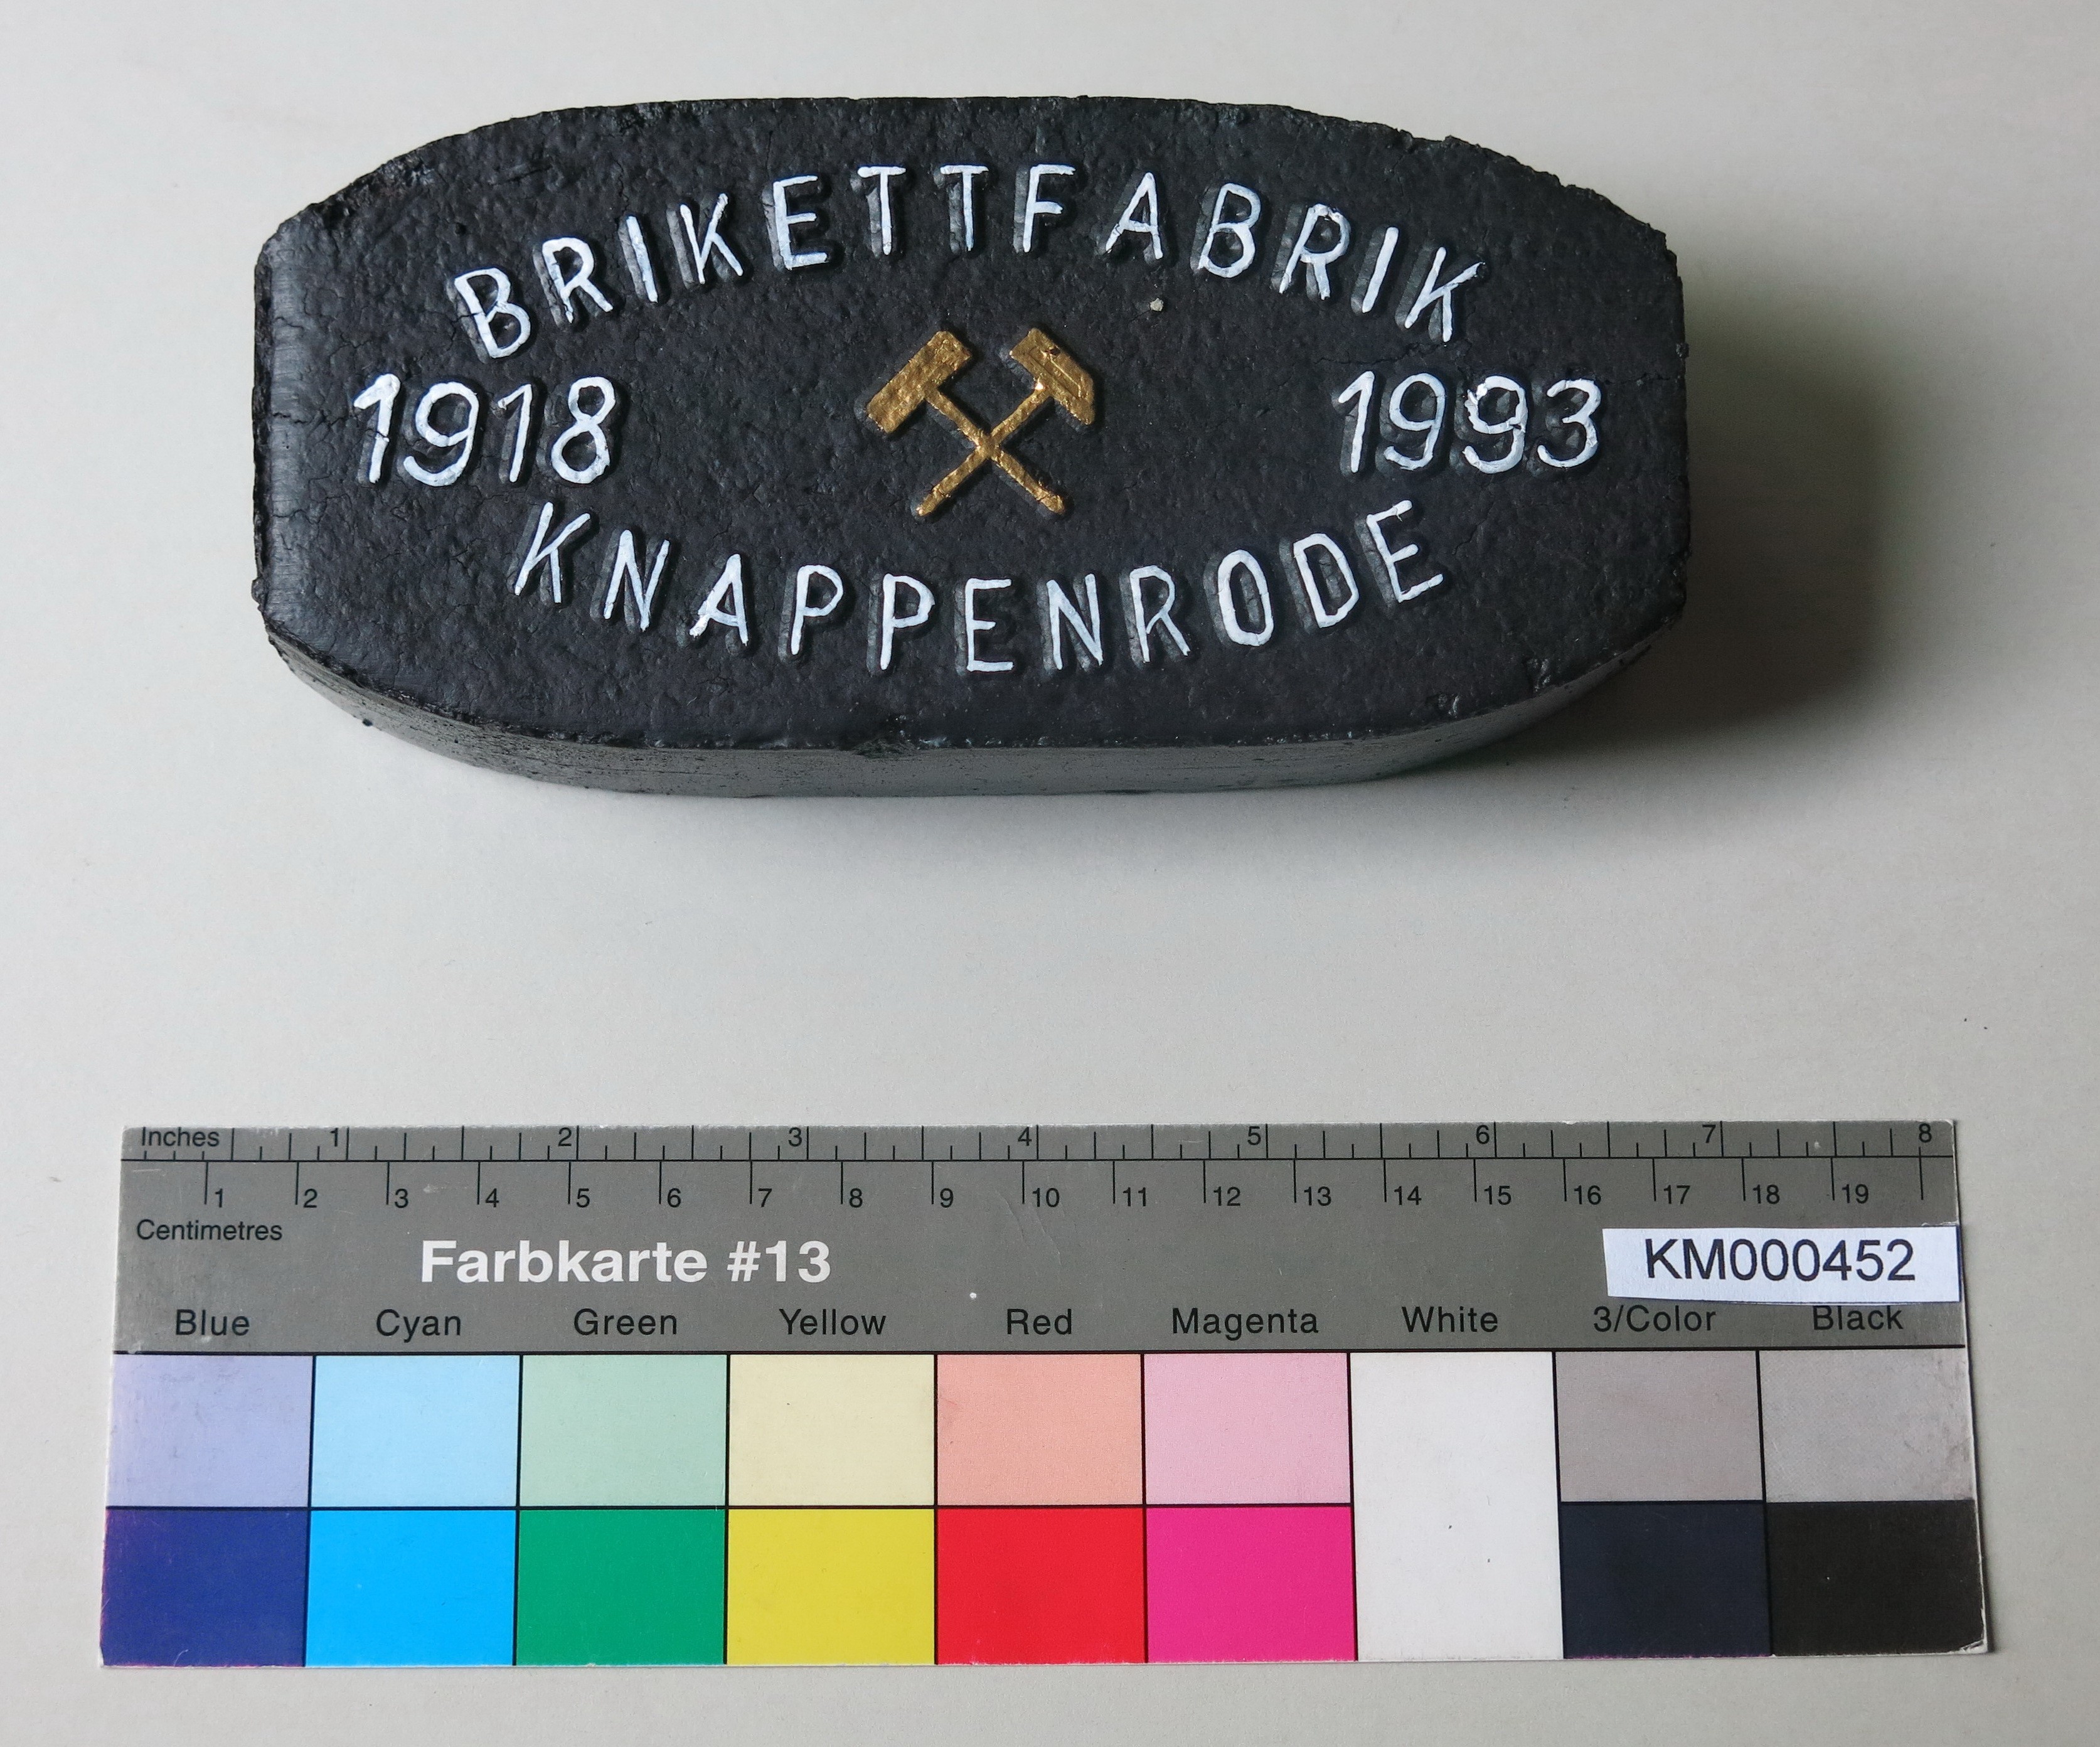 Zierbrikett "BRIKETTFABRIK 1918-1993 KNAPPENRODE" (Energiefabrik Knappenrode CC BY-SA)